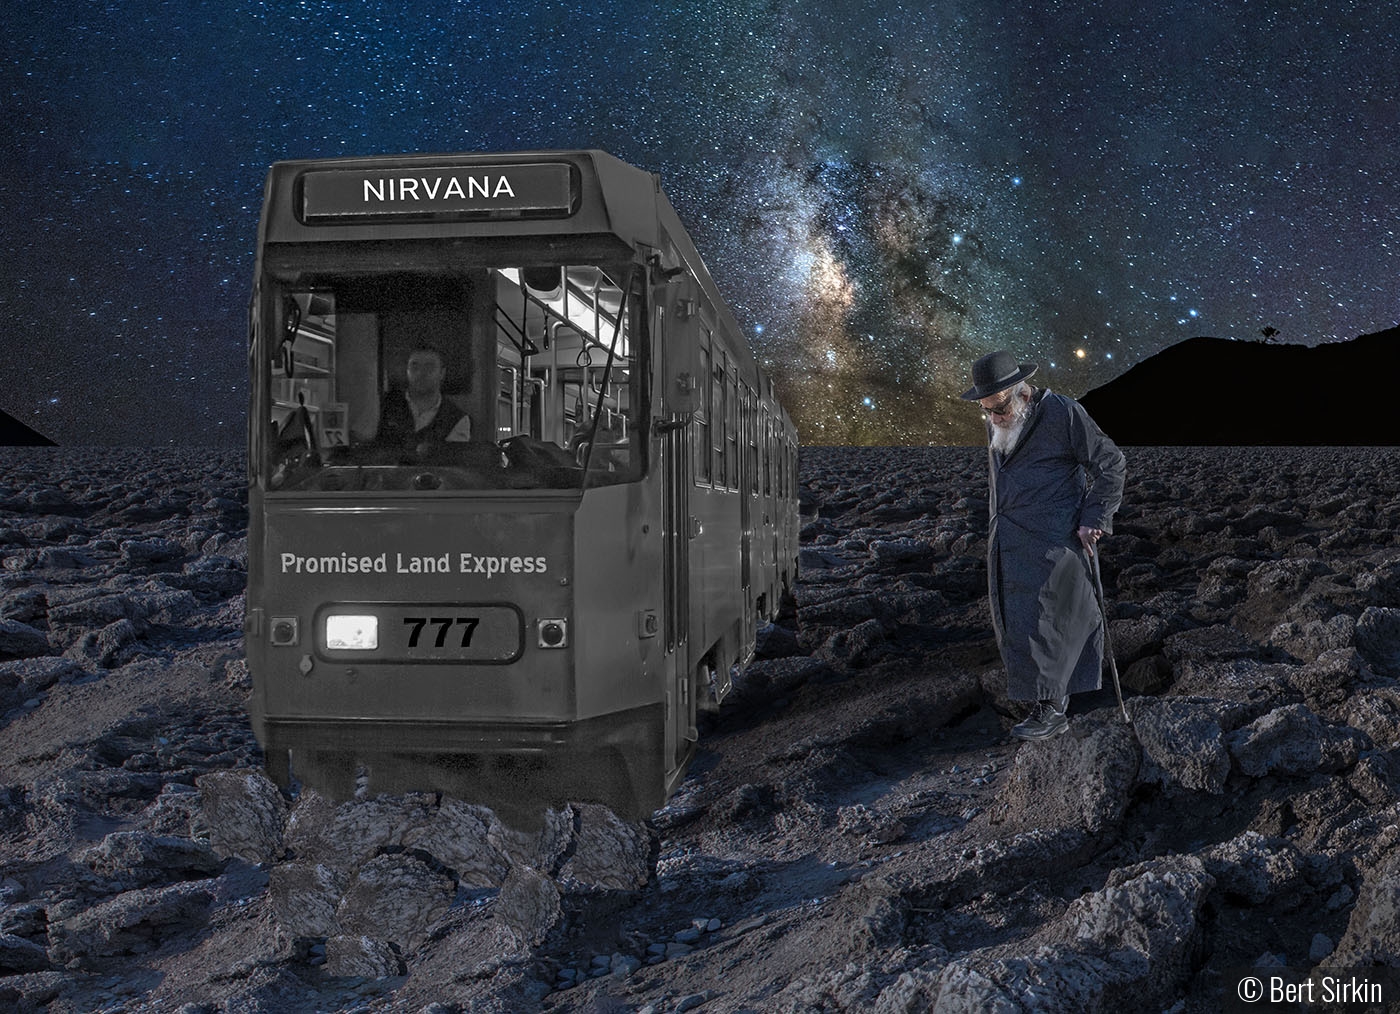 The bus to Nirvana by Bert Sirkin